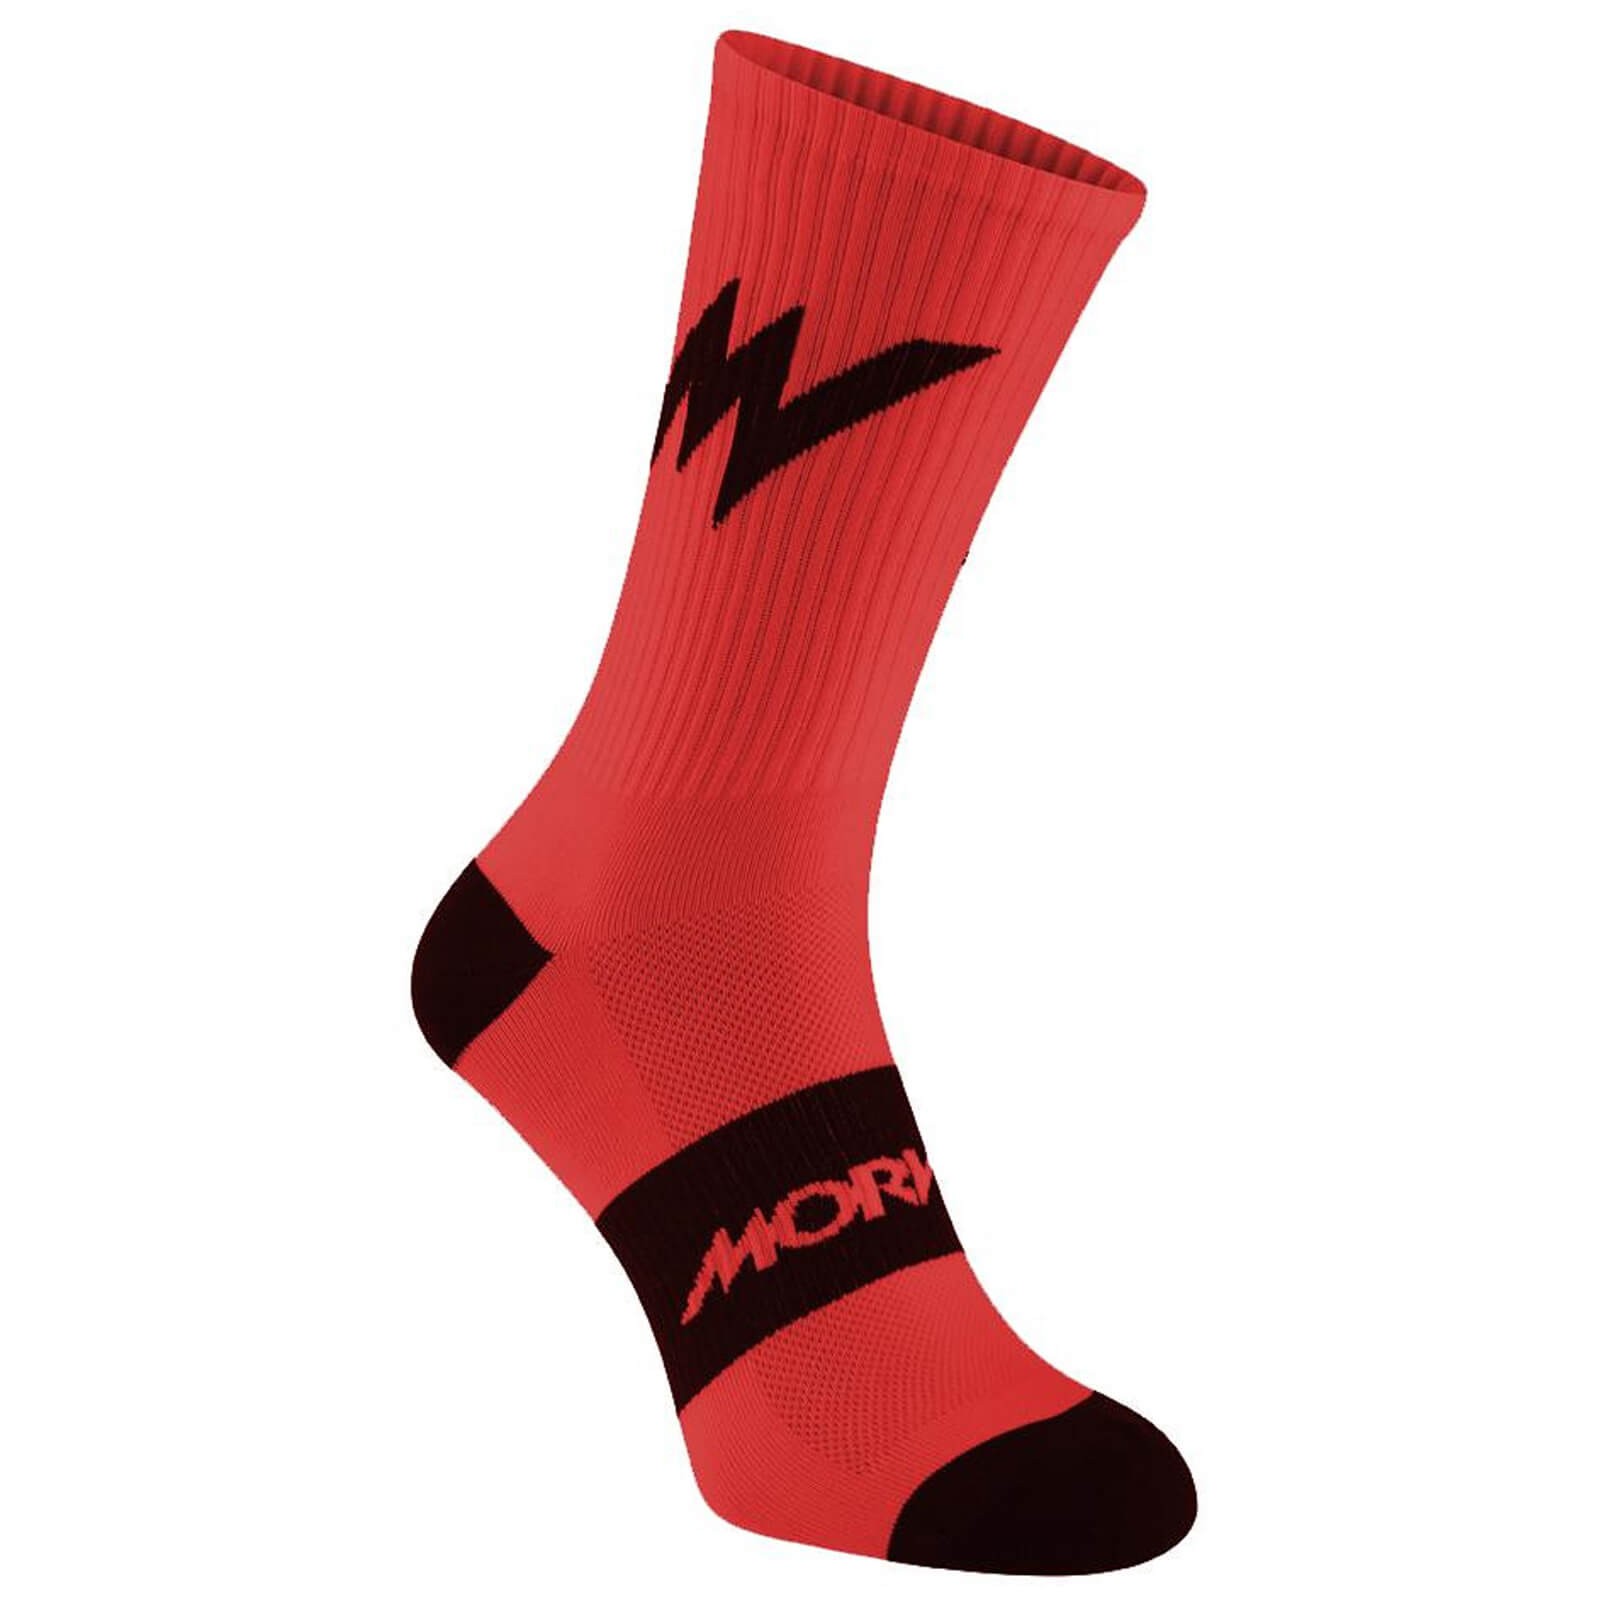 Morvelo Series Emblem Red Socks - L/XL